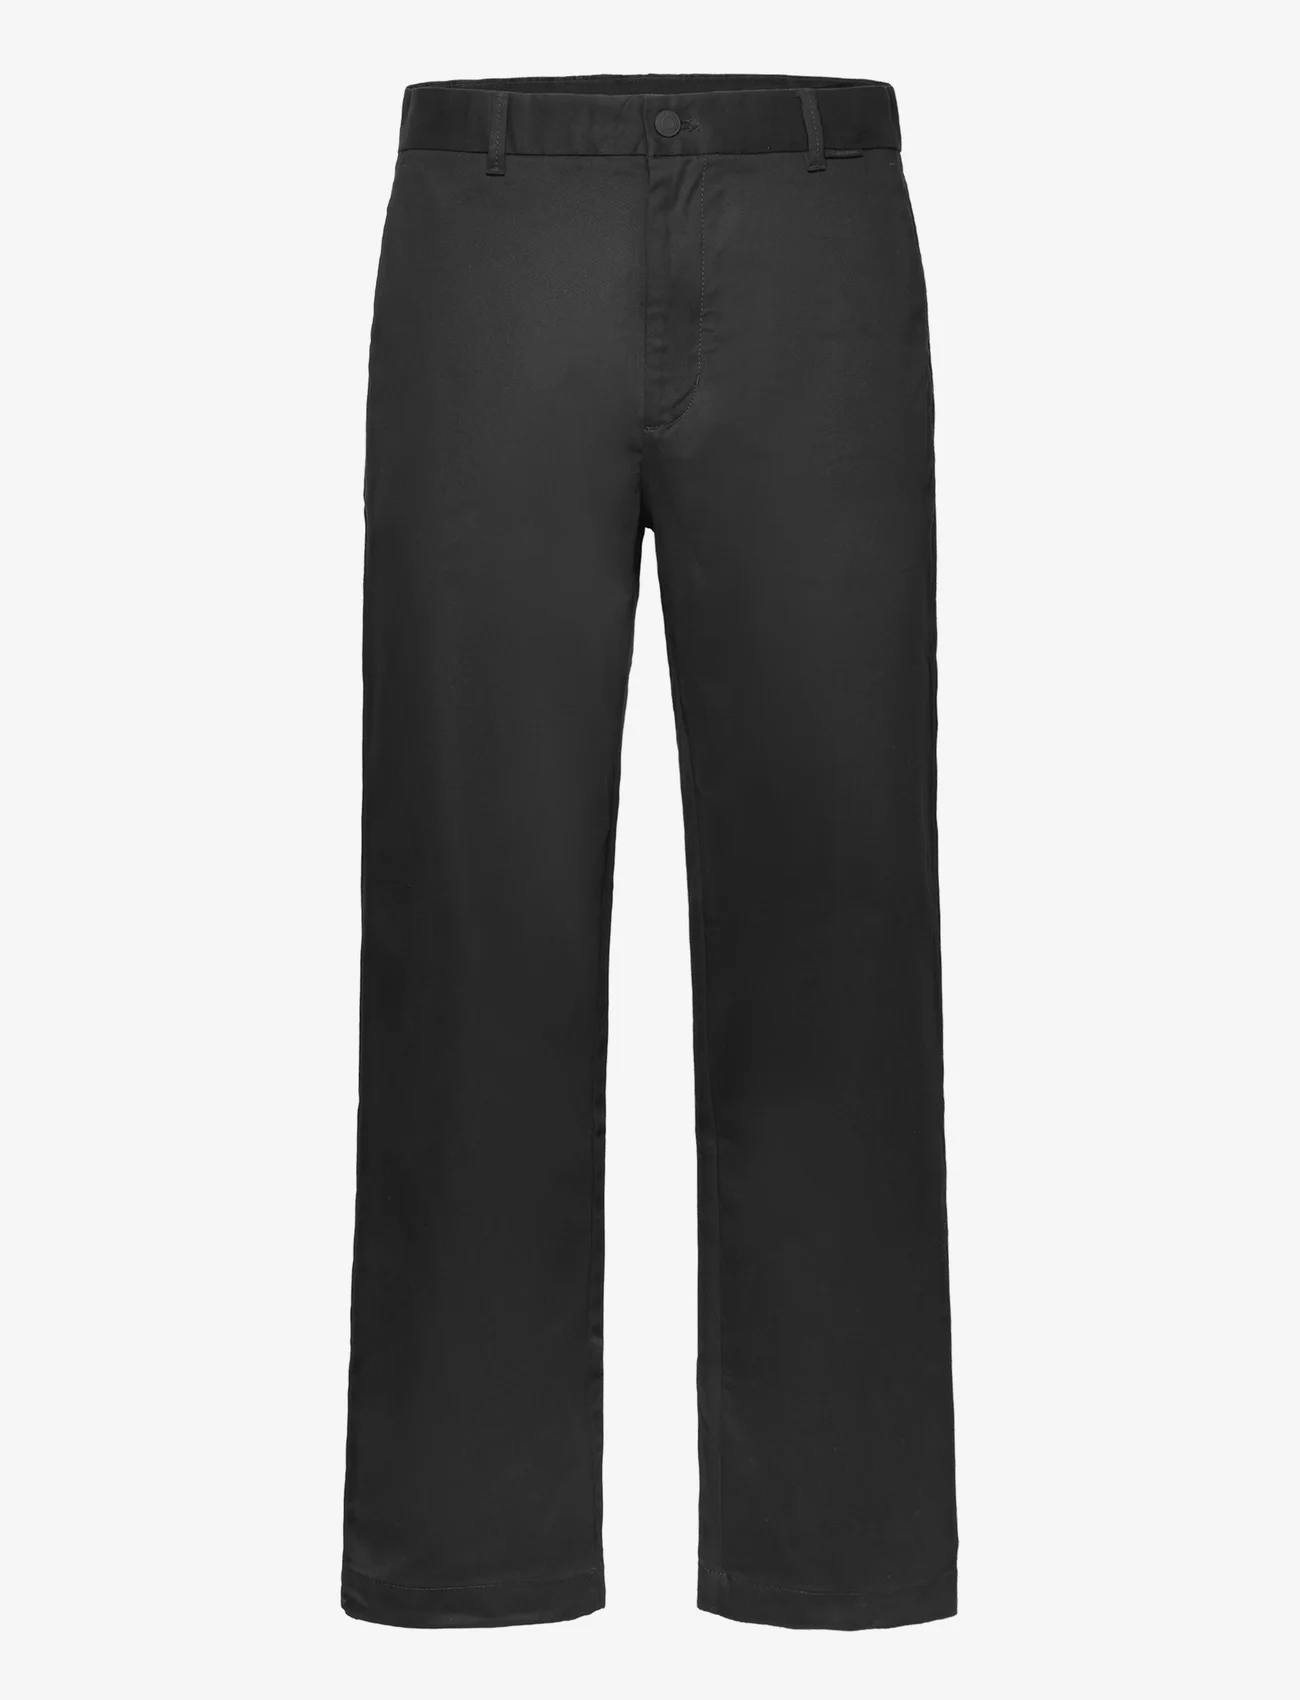 Calvin Klein - MODERN TWILL RELAXED PANTS - „chino“ stiliaus kelnės - ck black - 0